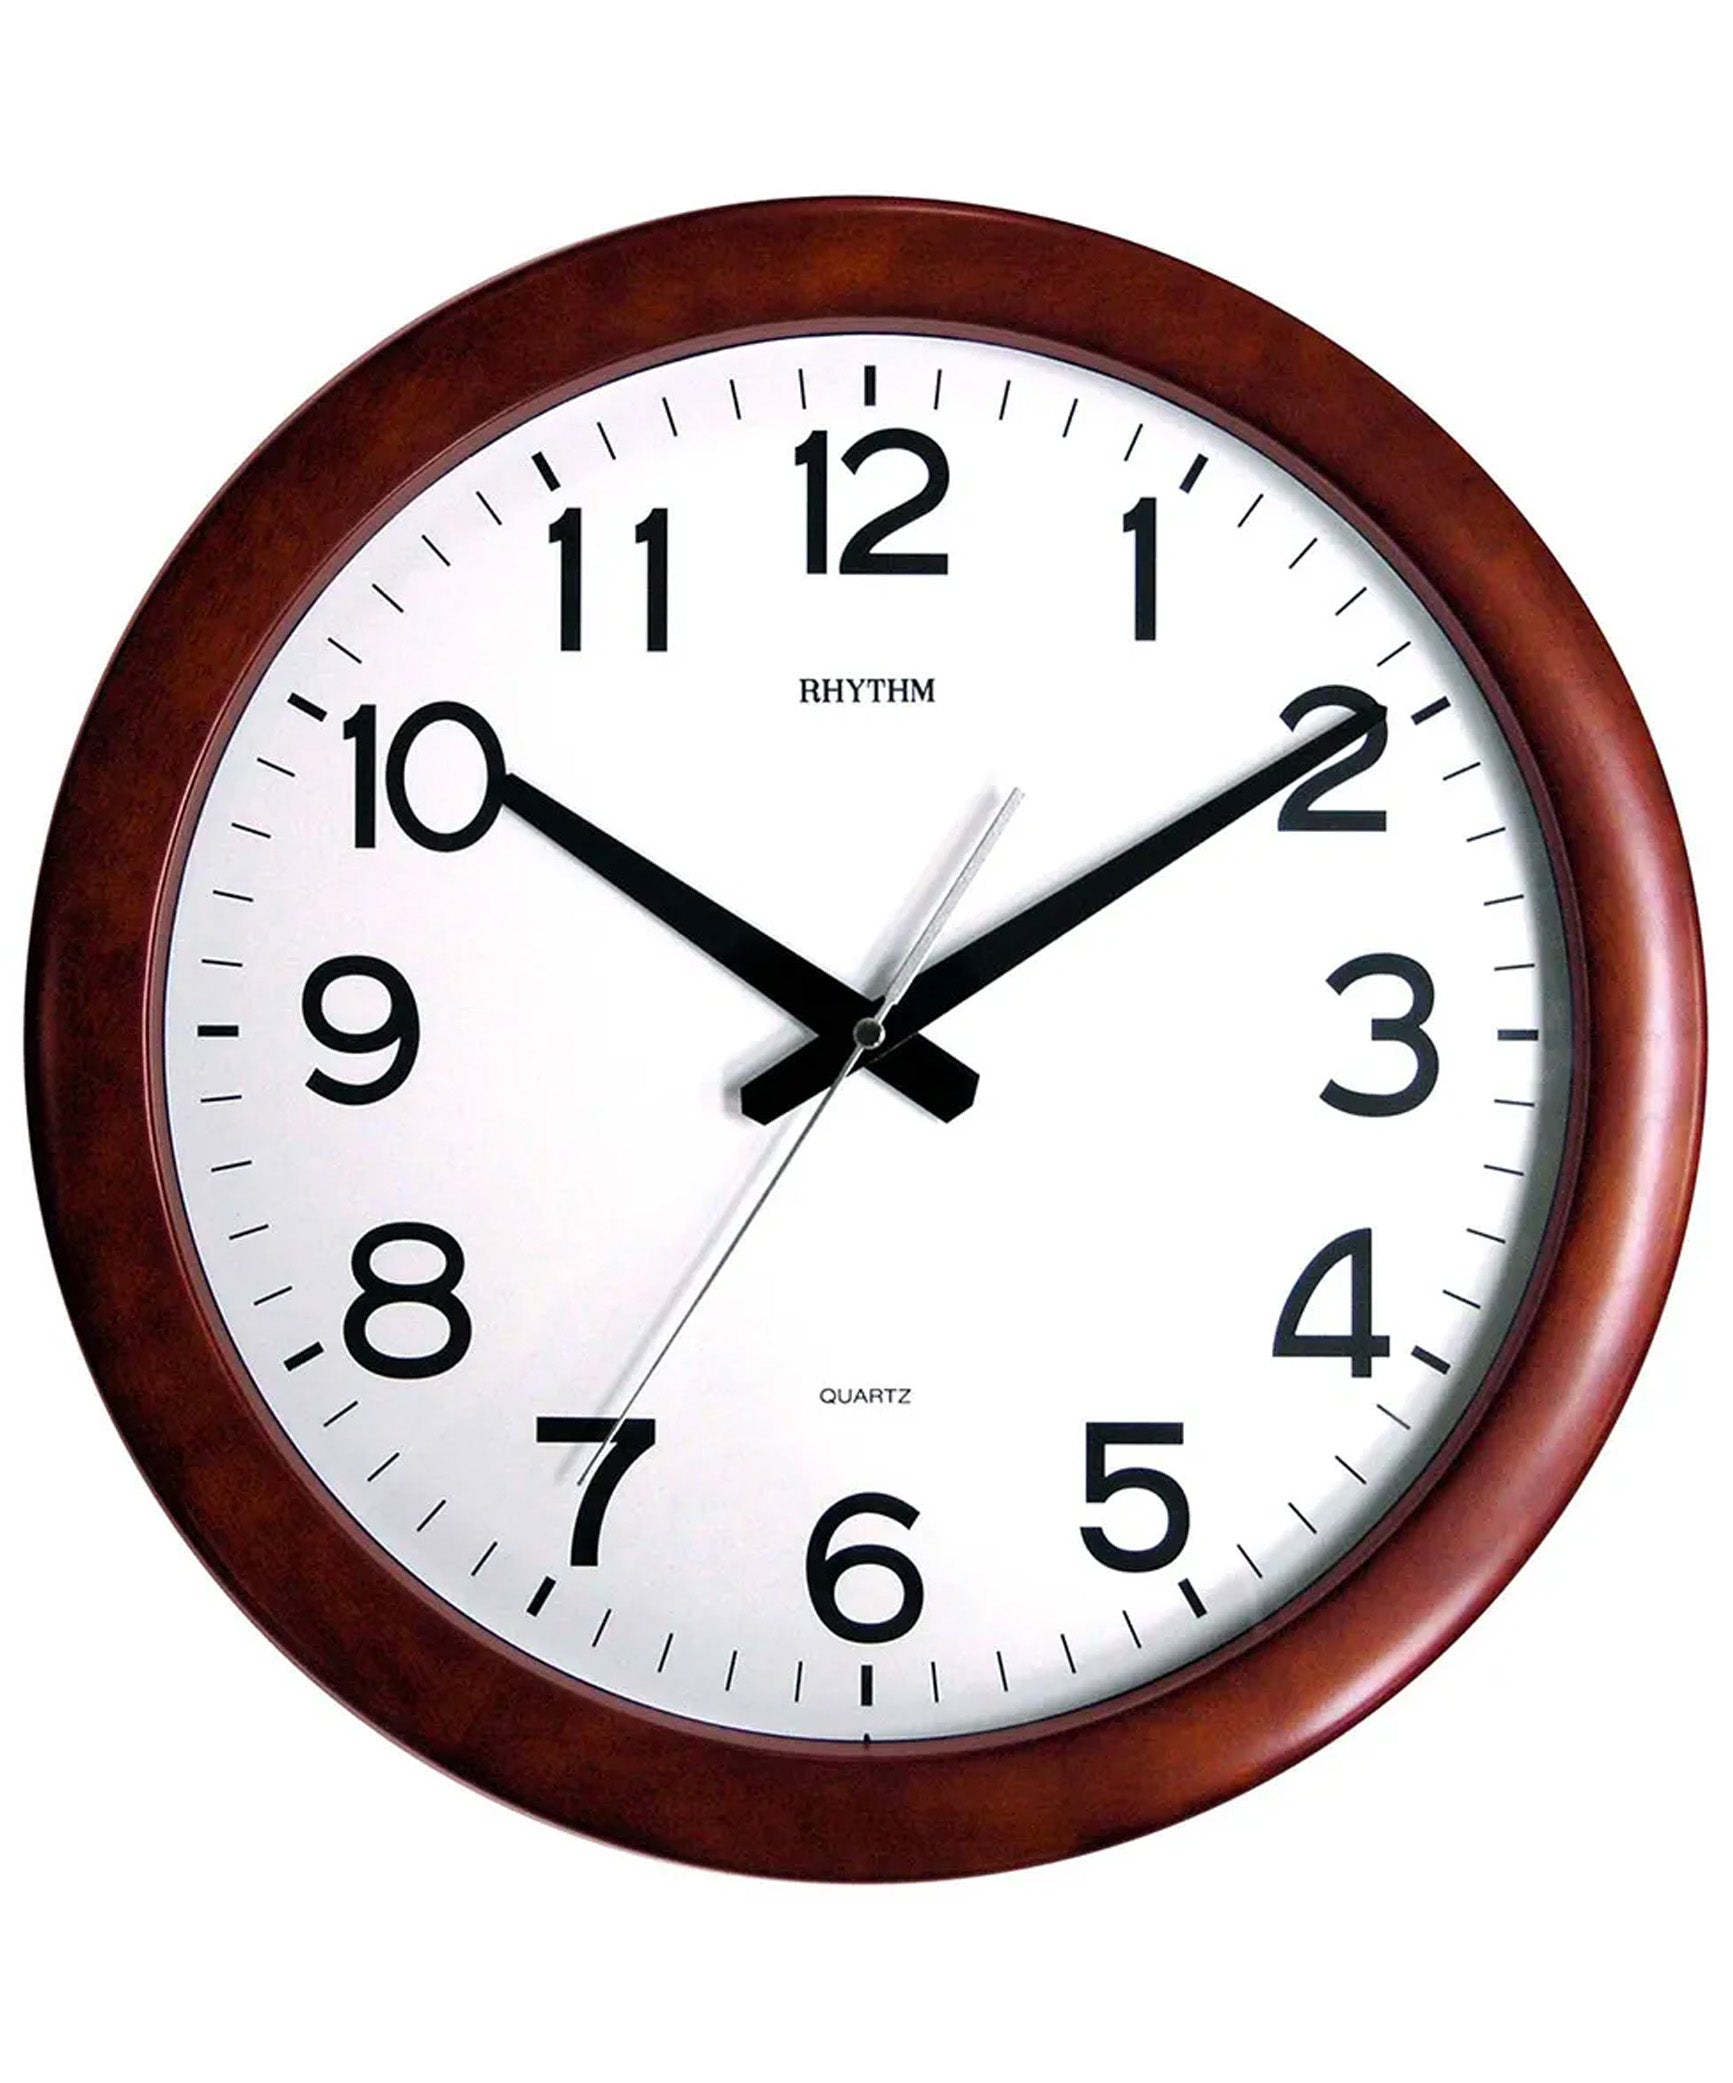 Rhythm Wall Clock Analog CMG919NR06 | stylish watch | accurate timekeeping | wall clock | round clock | Casio watch | wall watch | home décor | timepiece | Halabh.com